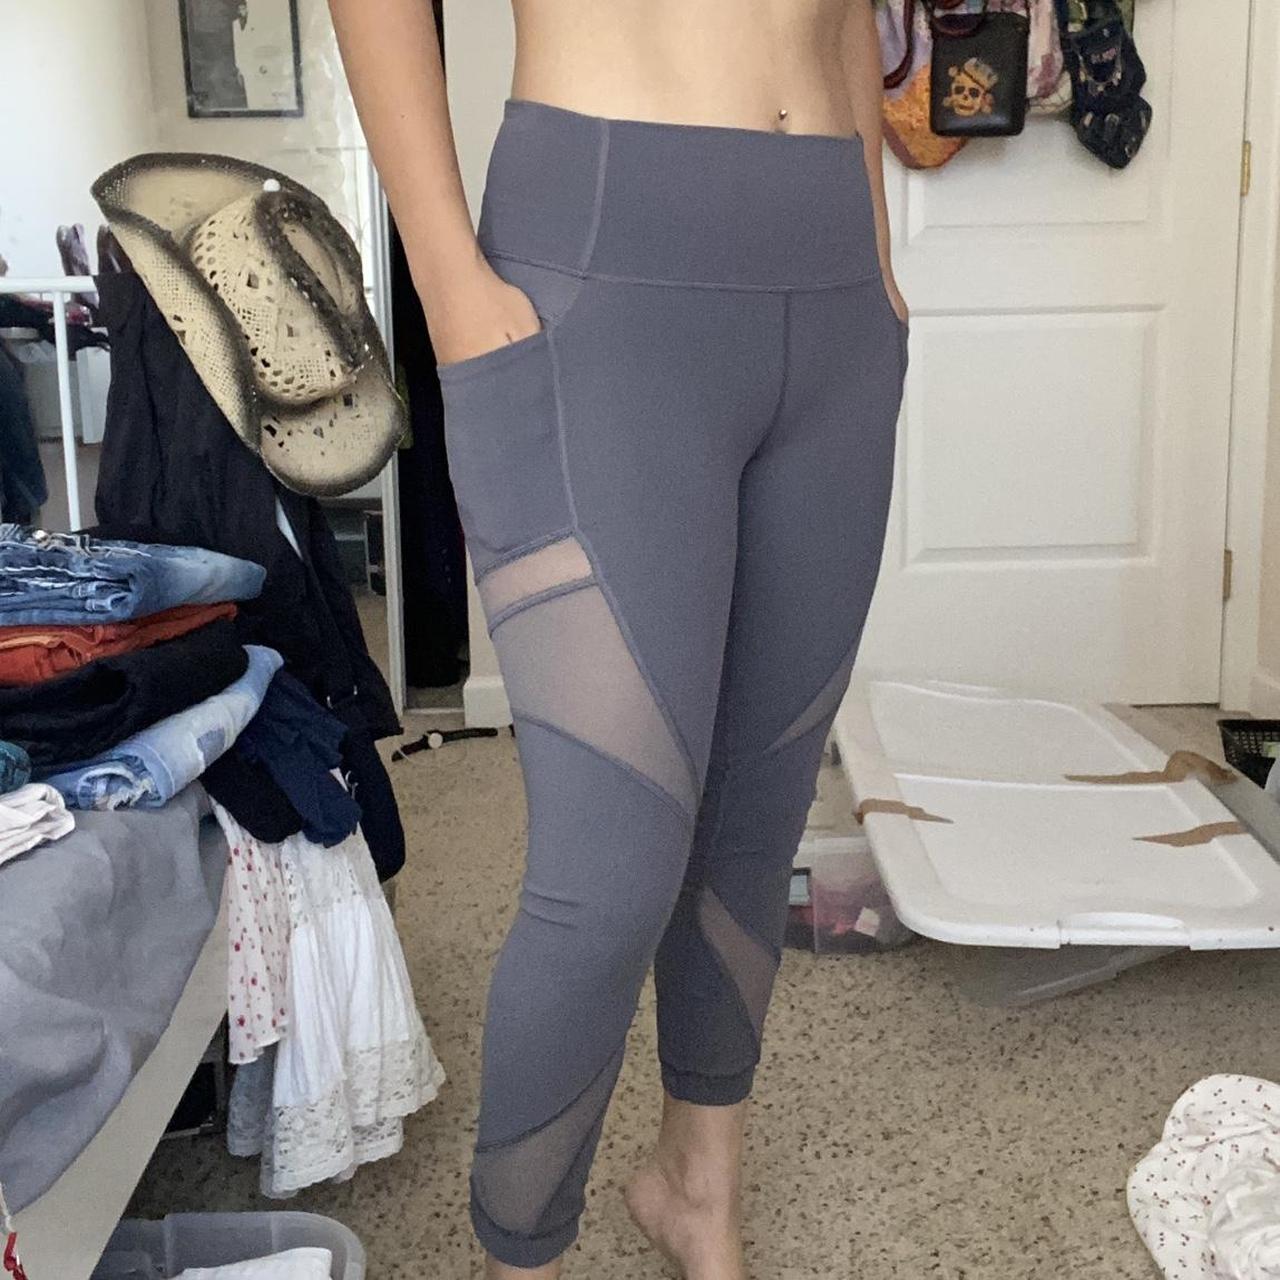 Lululemon grey leggings - Perfect condition and - Depop